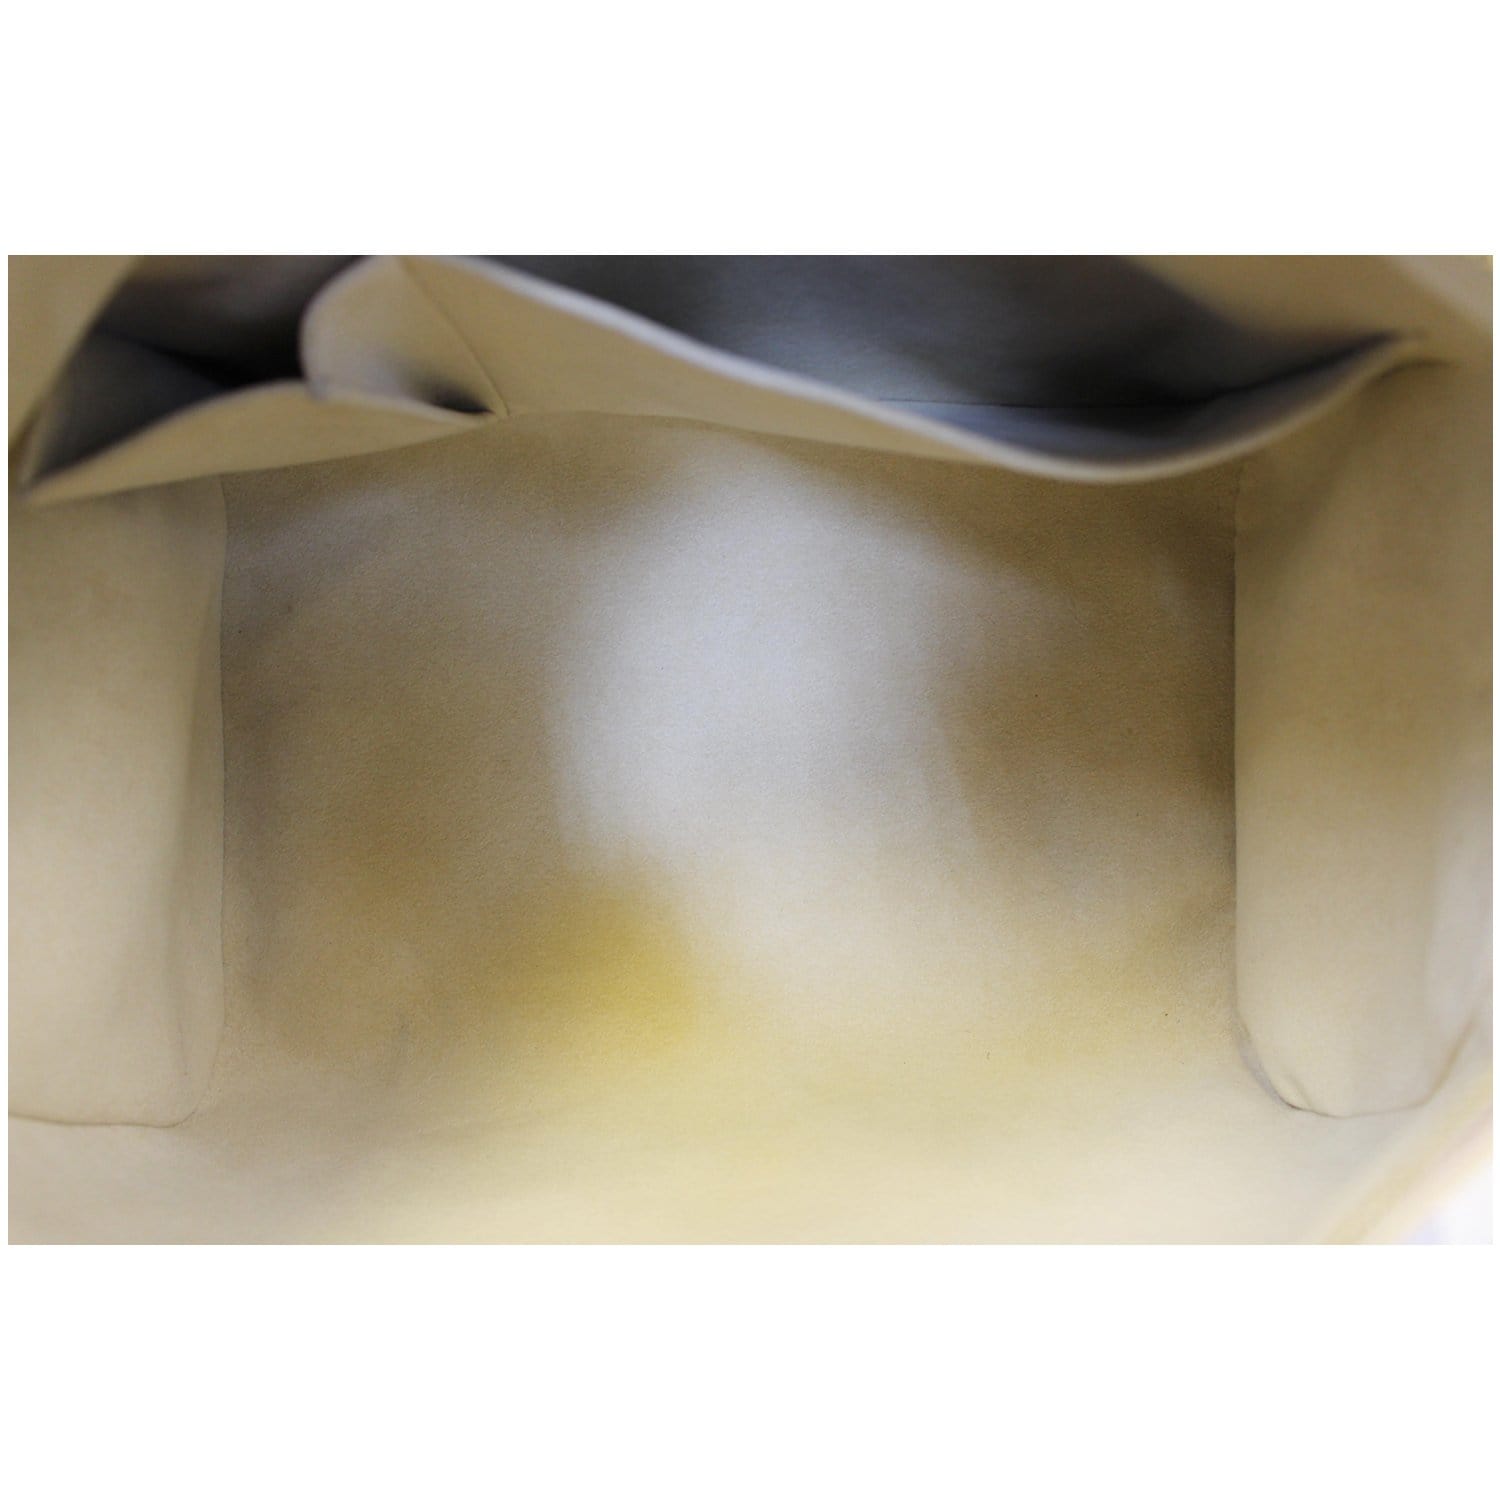 LOUIS VUITTON Berkeley Damier Azur Satchel Handbag White-E5507-Sold 